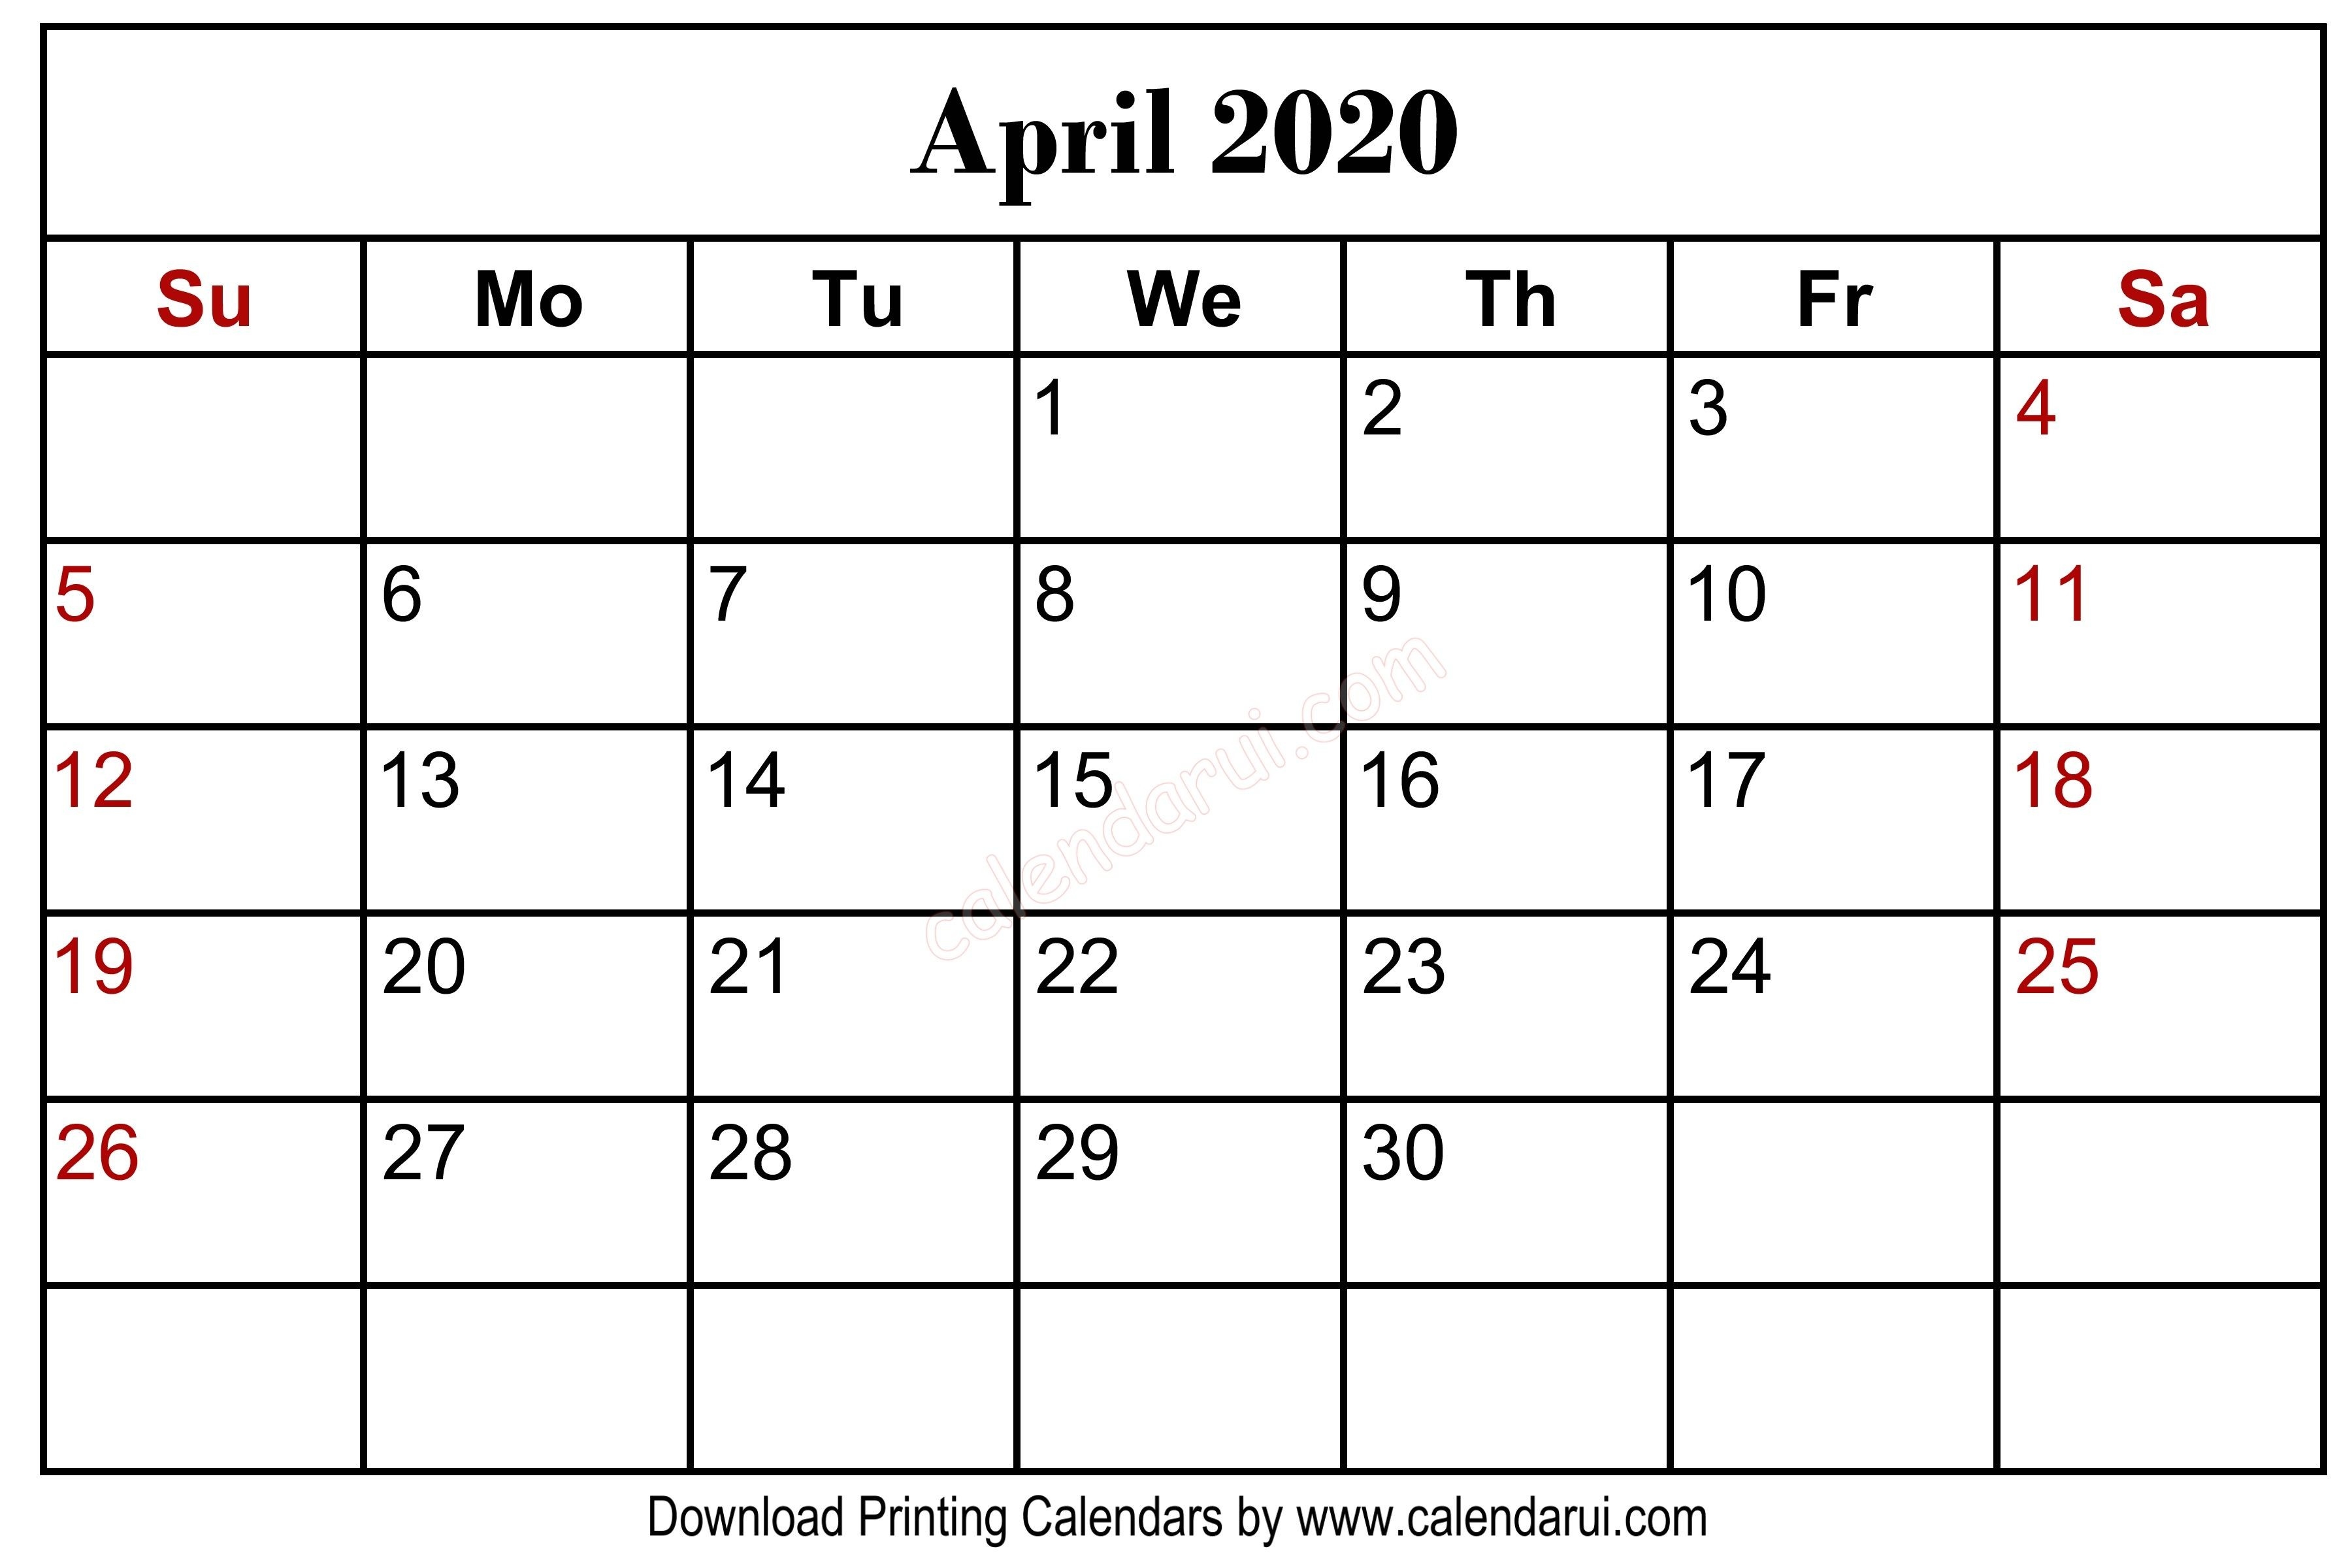 April 2020 Blank Calendar Printable Centre Header | Monthly-January 2020 Calendar Drik Panchang